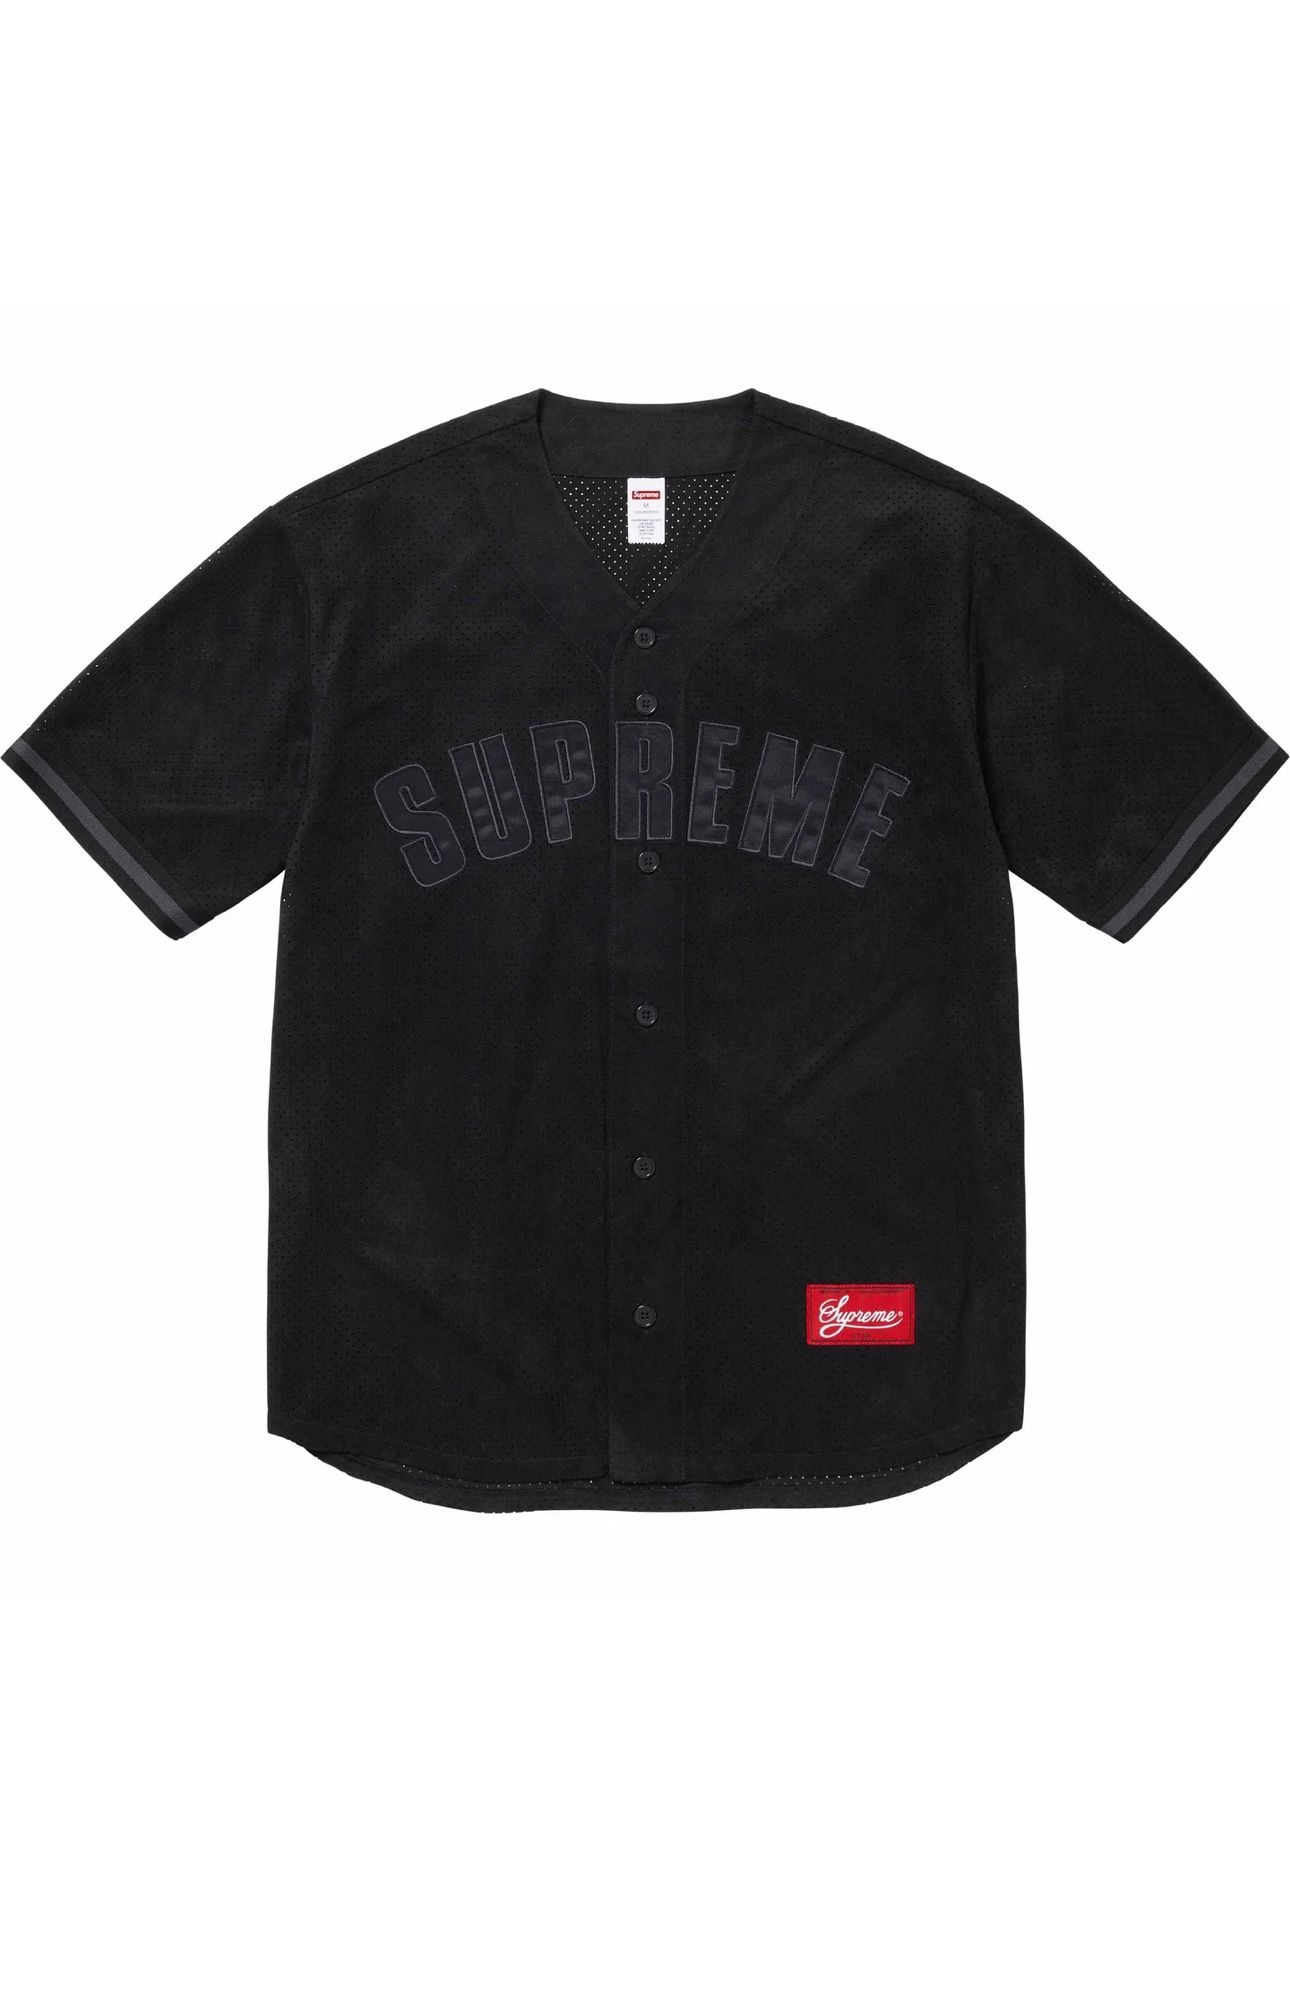 Supreme UltraSuede Mesh Baseball Jersey Black